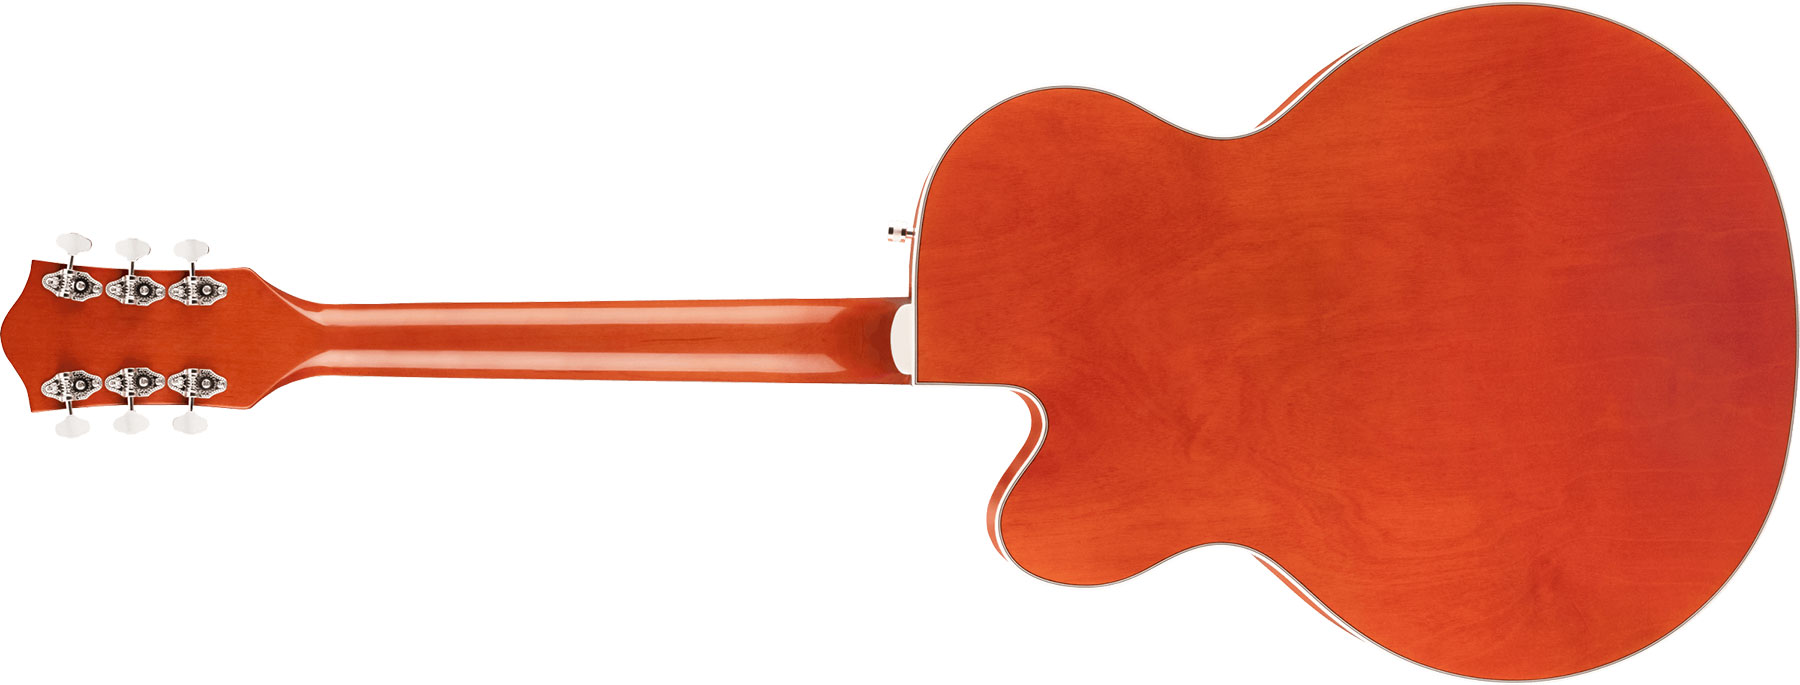 Gretsch G5420t Classic Electromatic Hollow Body Hh Trem Bigsby Lau - Orange Stain - Semi-Hollow E-Gitarre - Variation 1